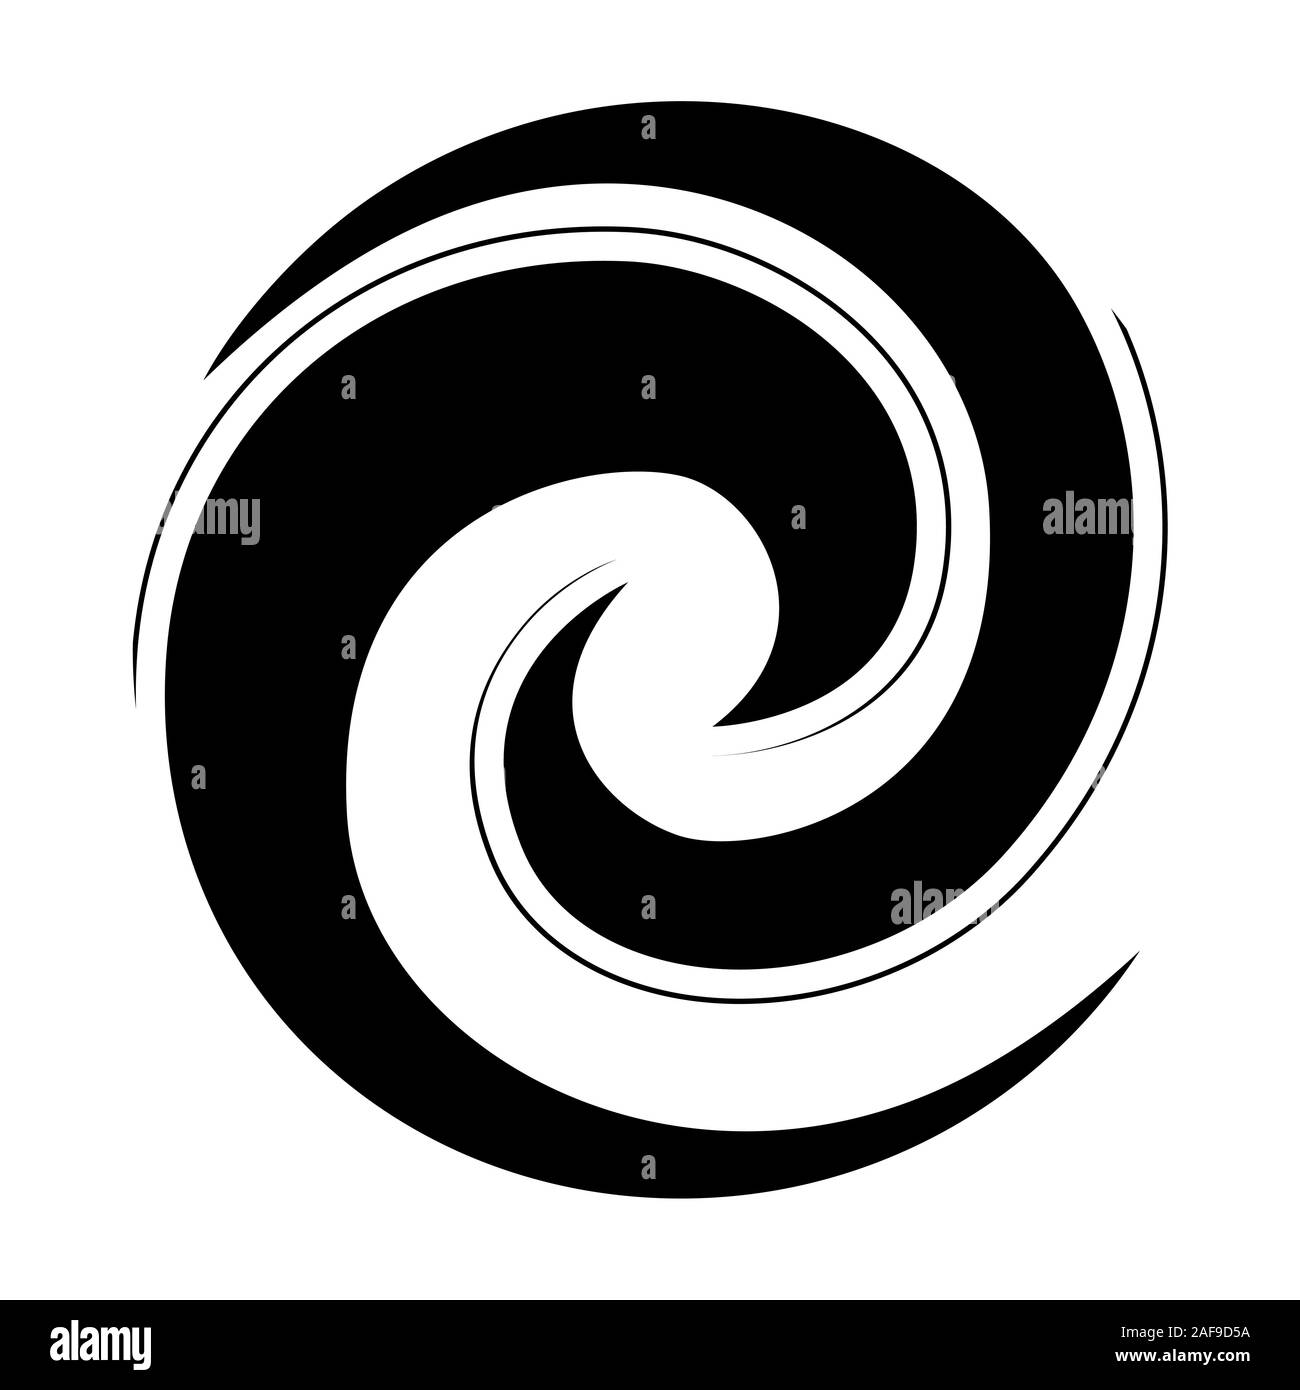 Koru spiral icon in black stylised maori logo or tattoo New Zealand Kiwiana style Stock Vector